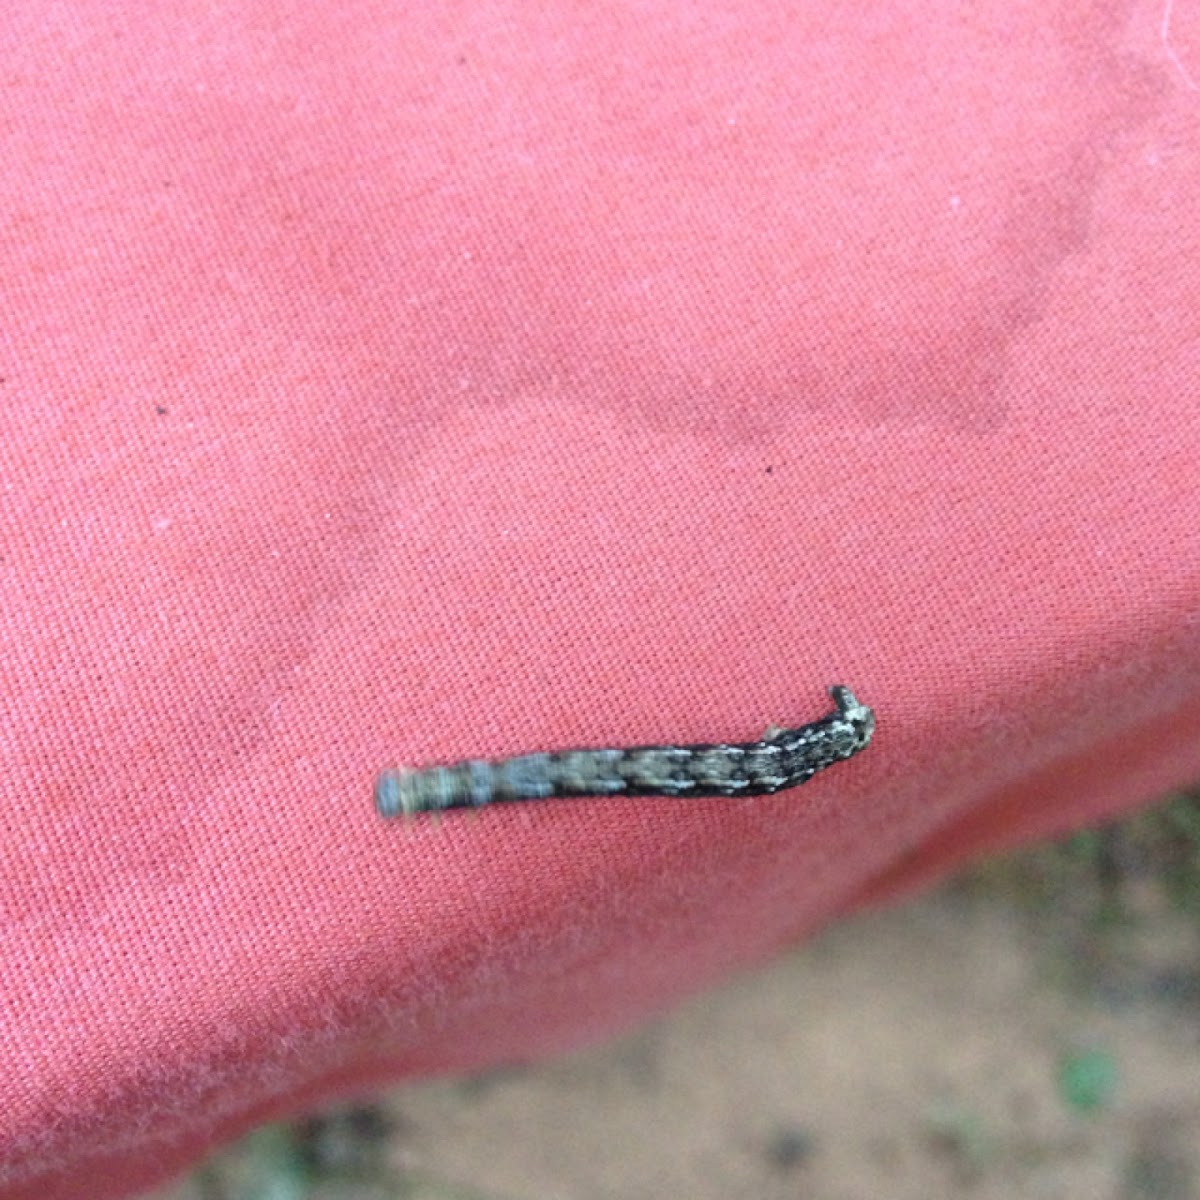 Inch worm